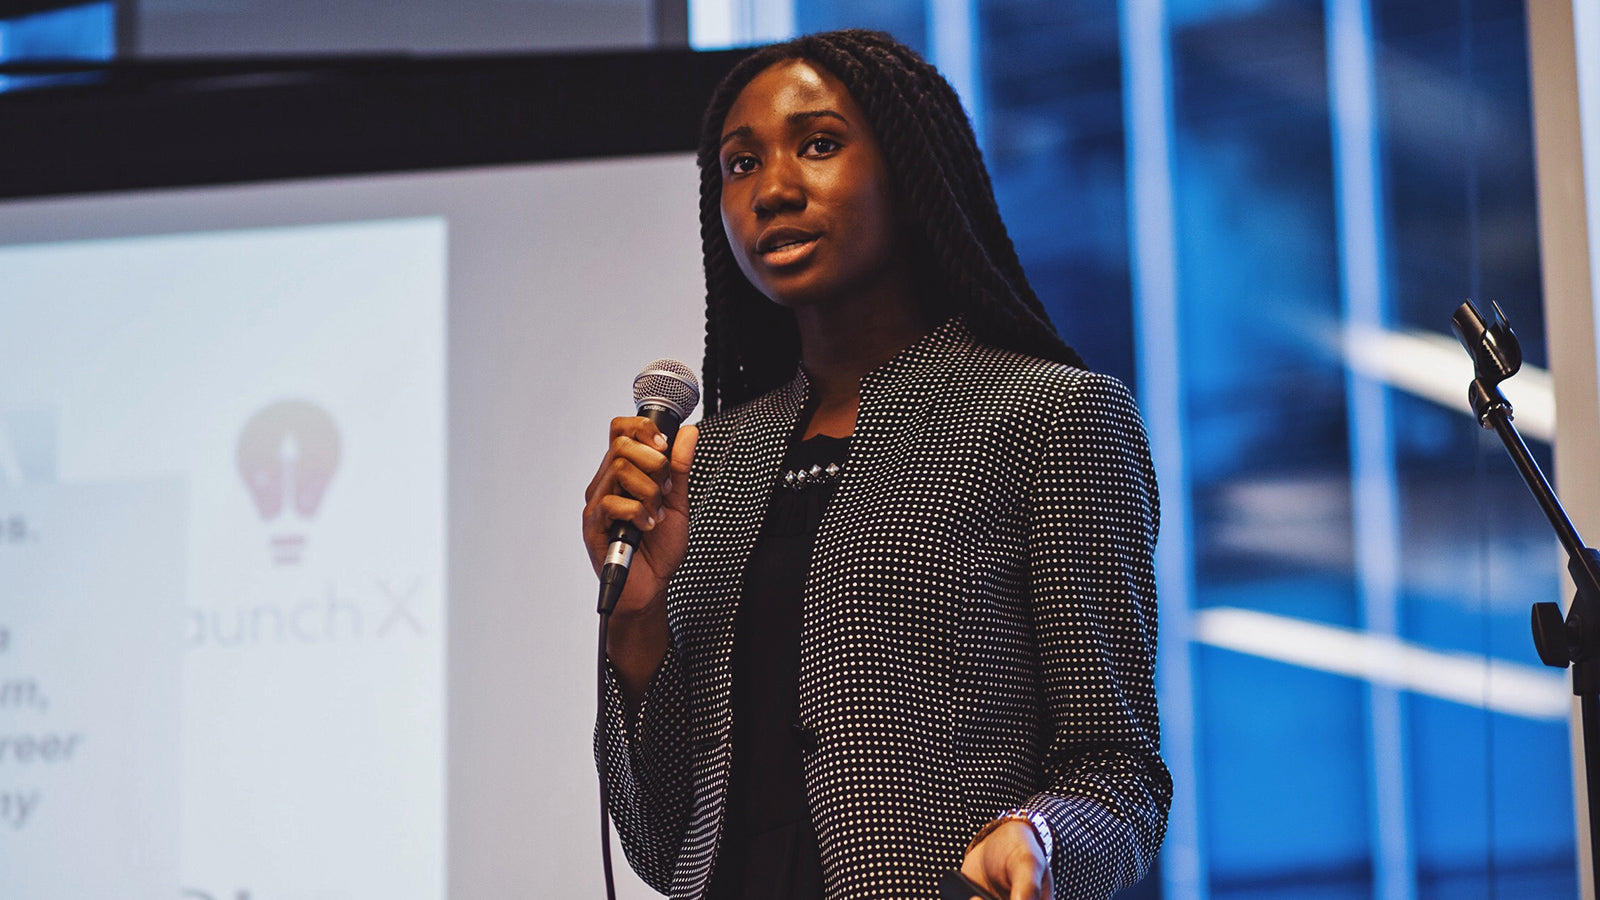 A recipient of Black Girl Ventures funding makes a presentation